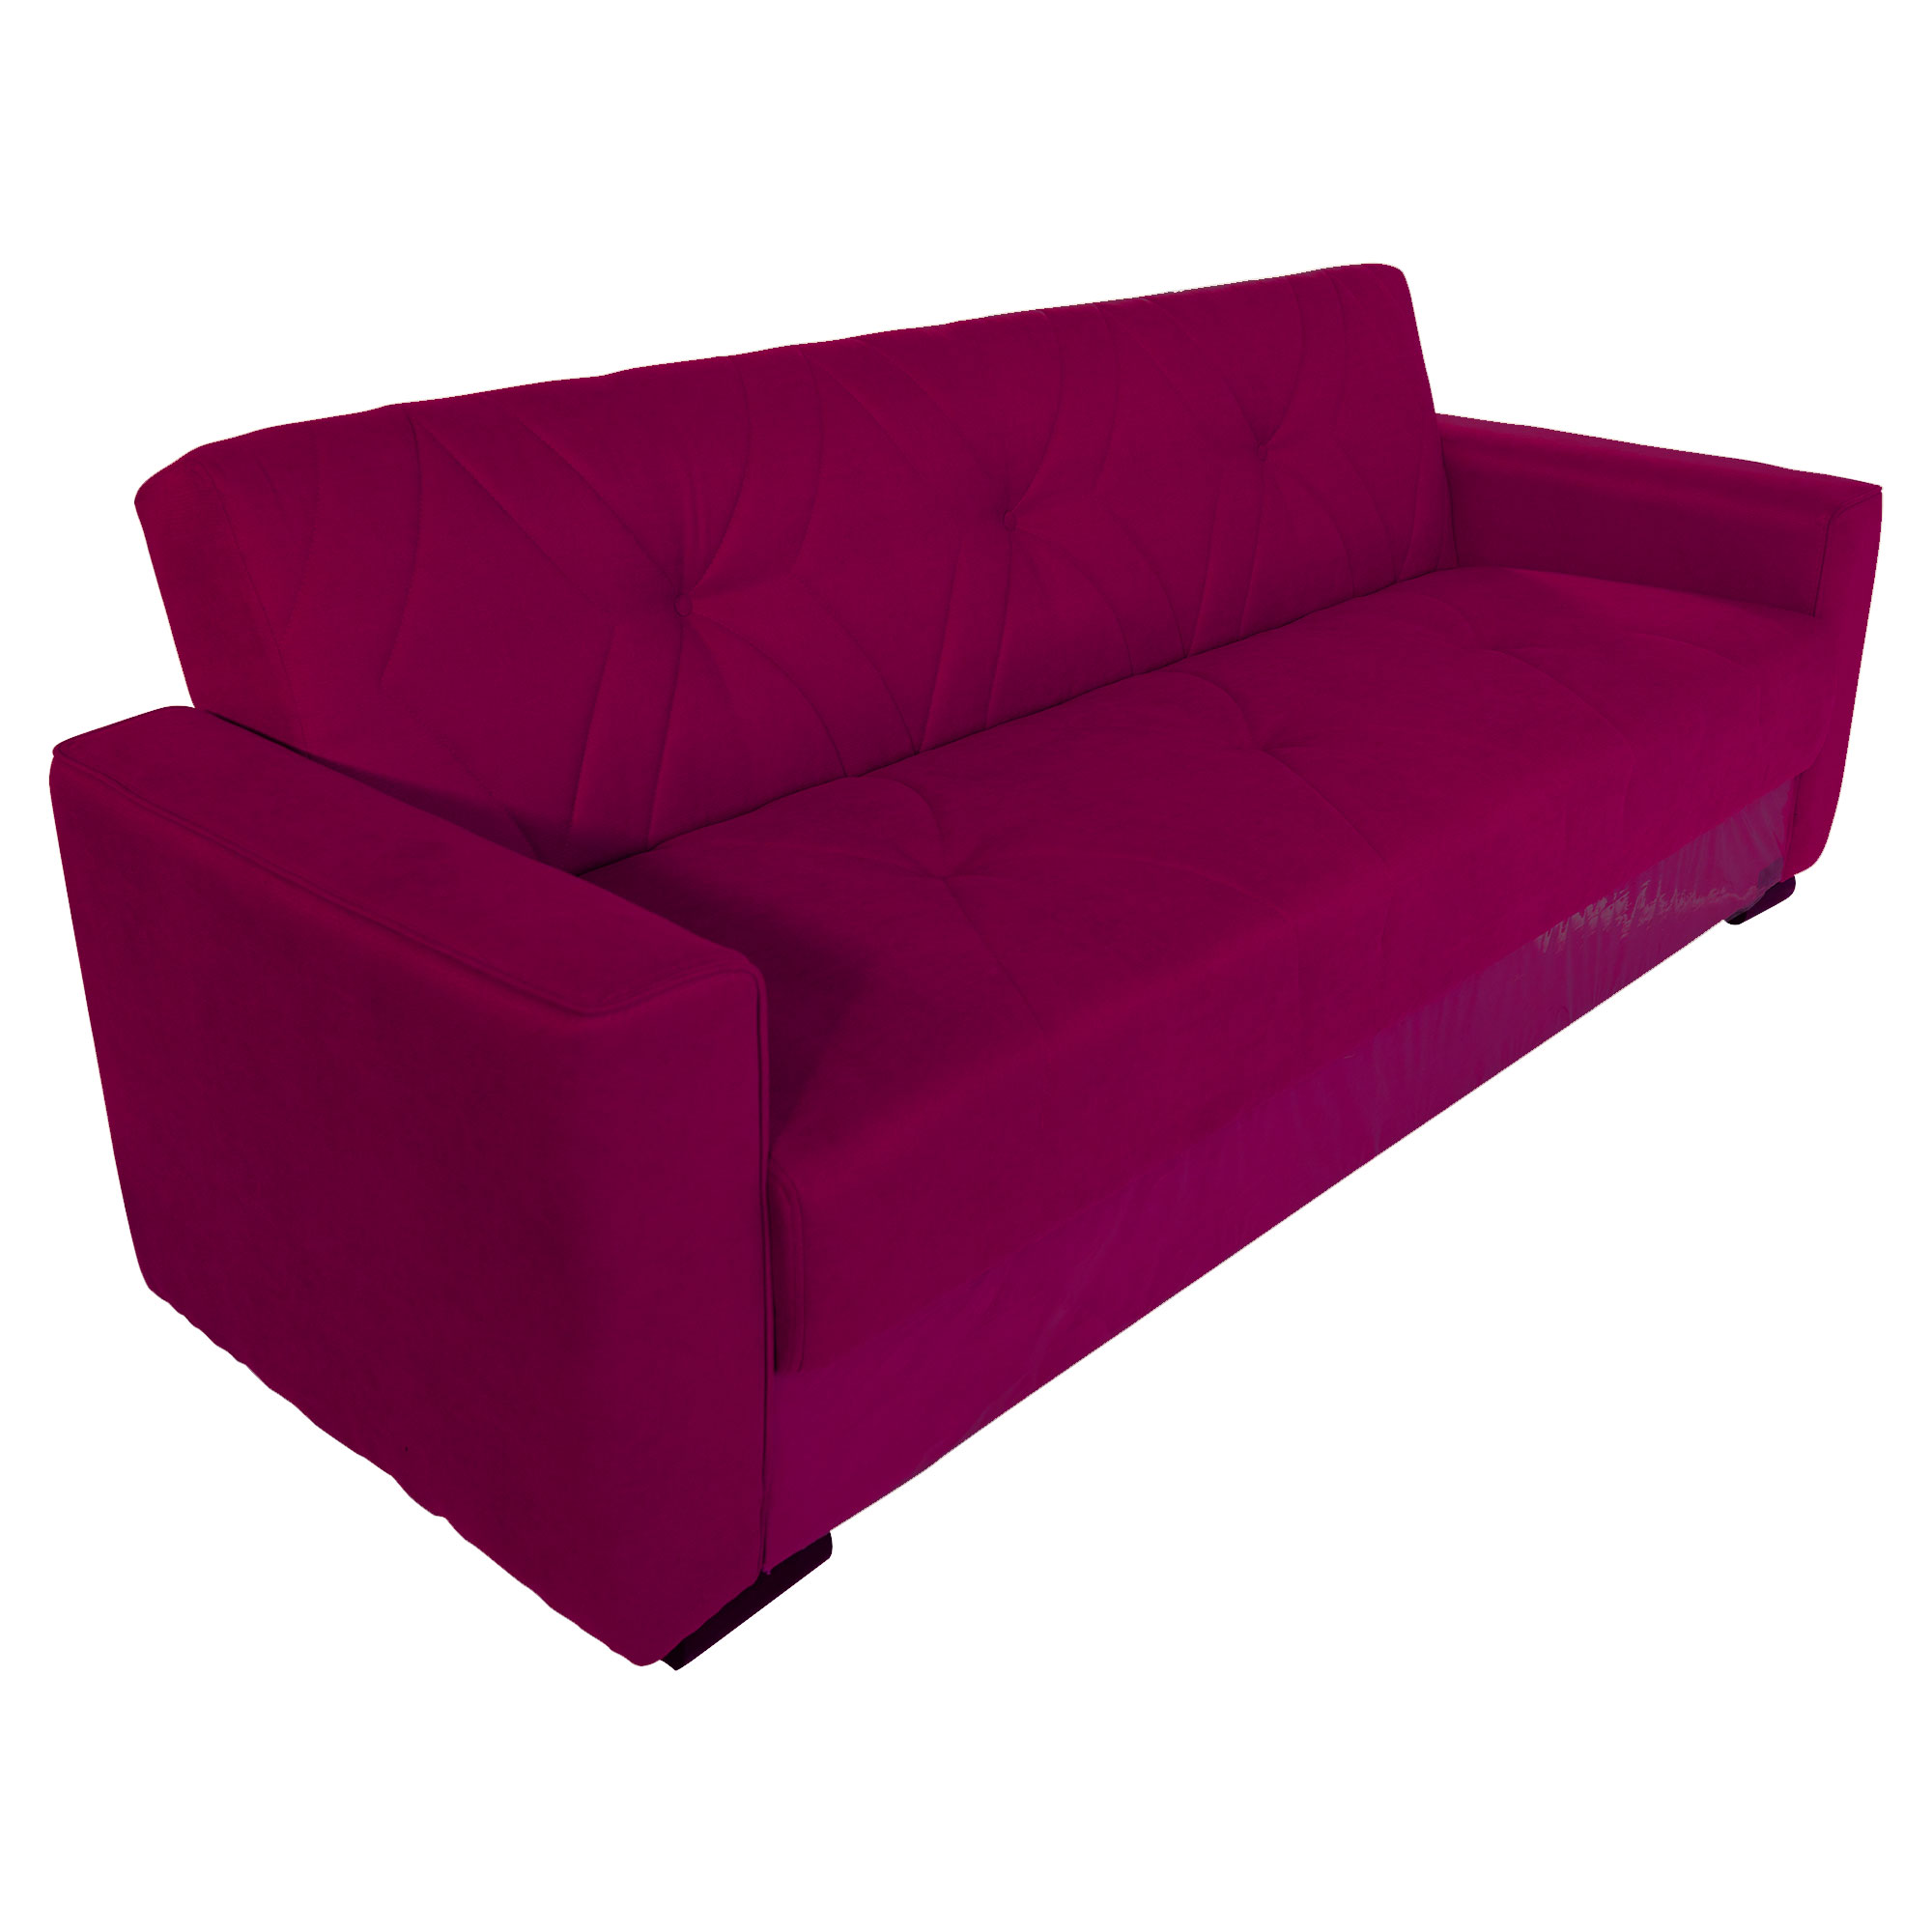 Sofa Bed 2020 from Aldoraكنبة سرير 2020 من الدورا